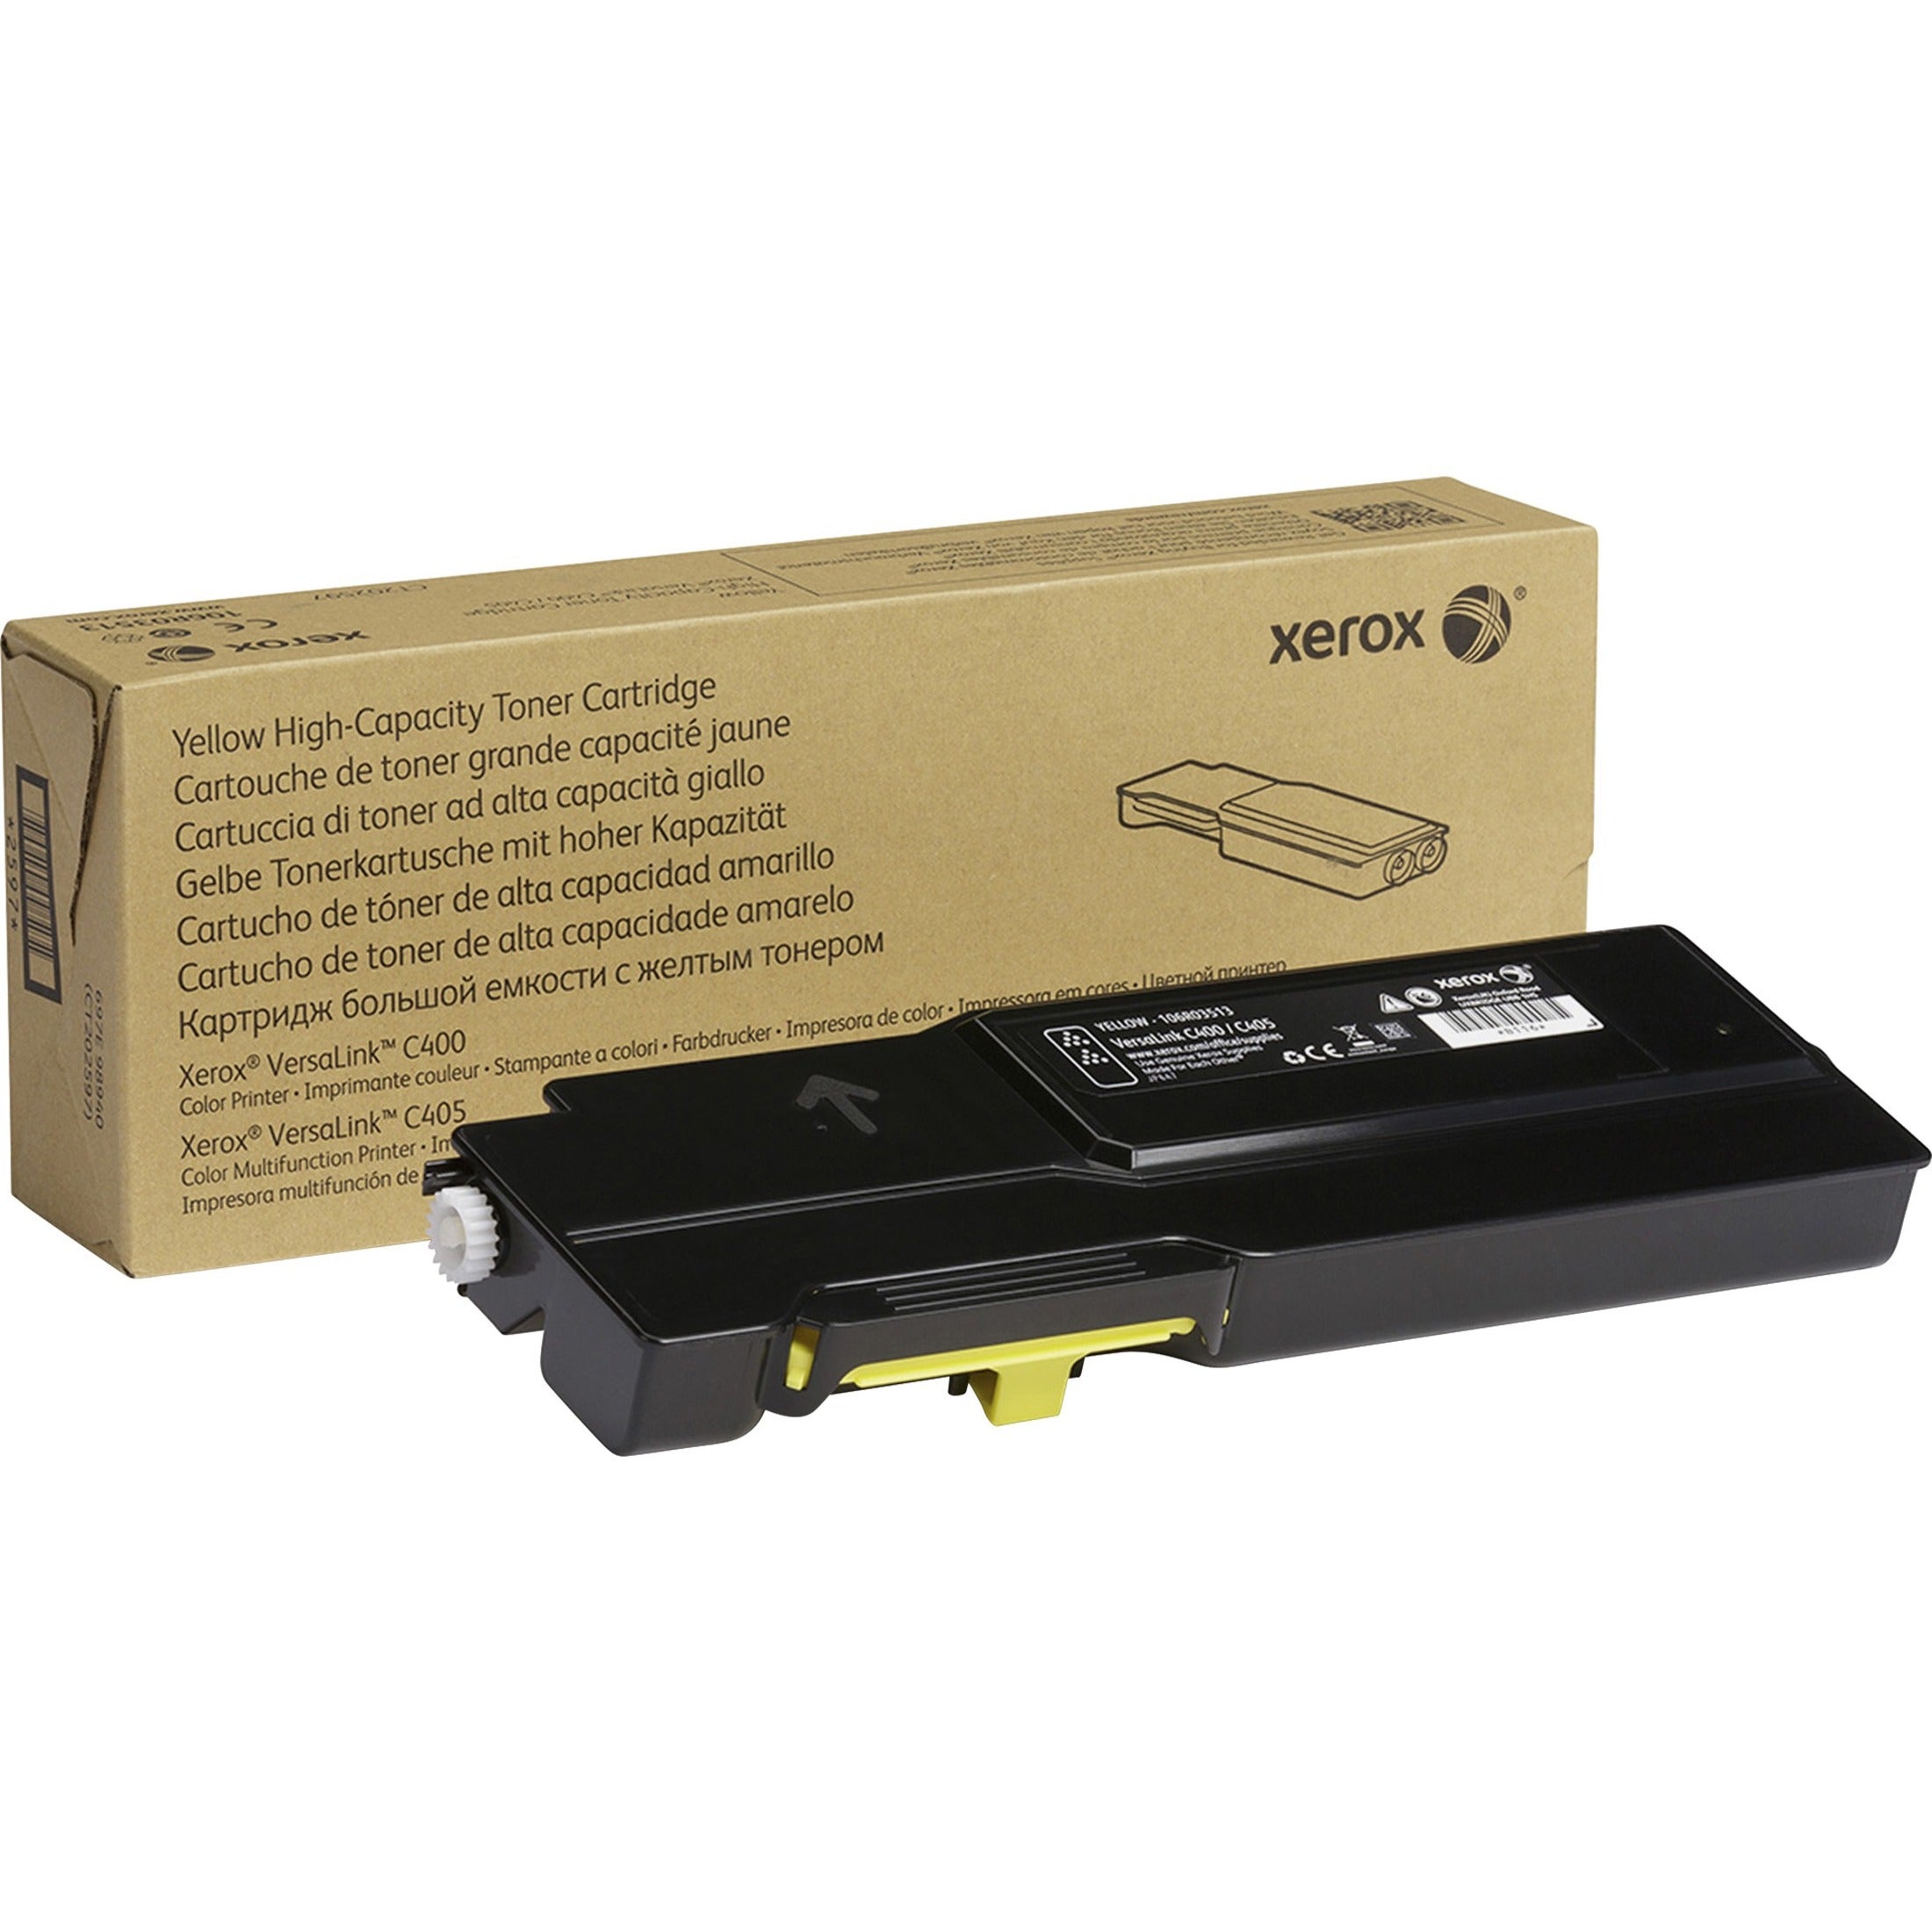 Xerox 106R03513 Genuine Yellow High Capacity Toner Cartridge For The VersaLink C400/C405, 4800 Pages Yield